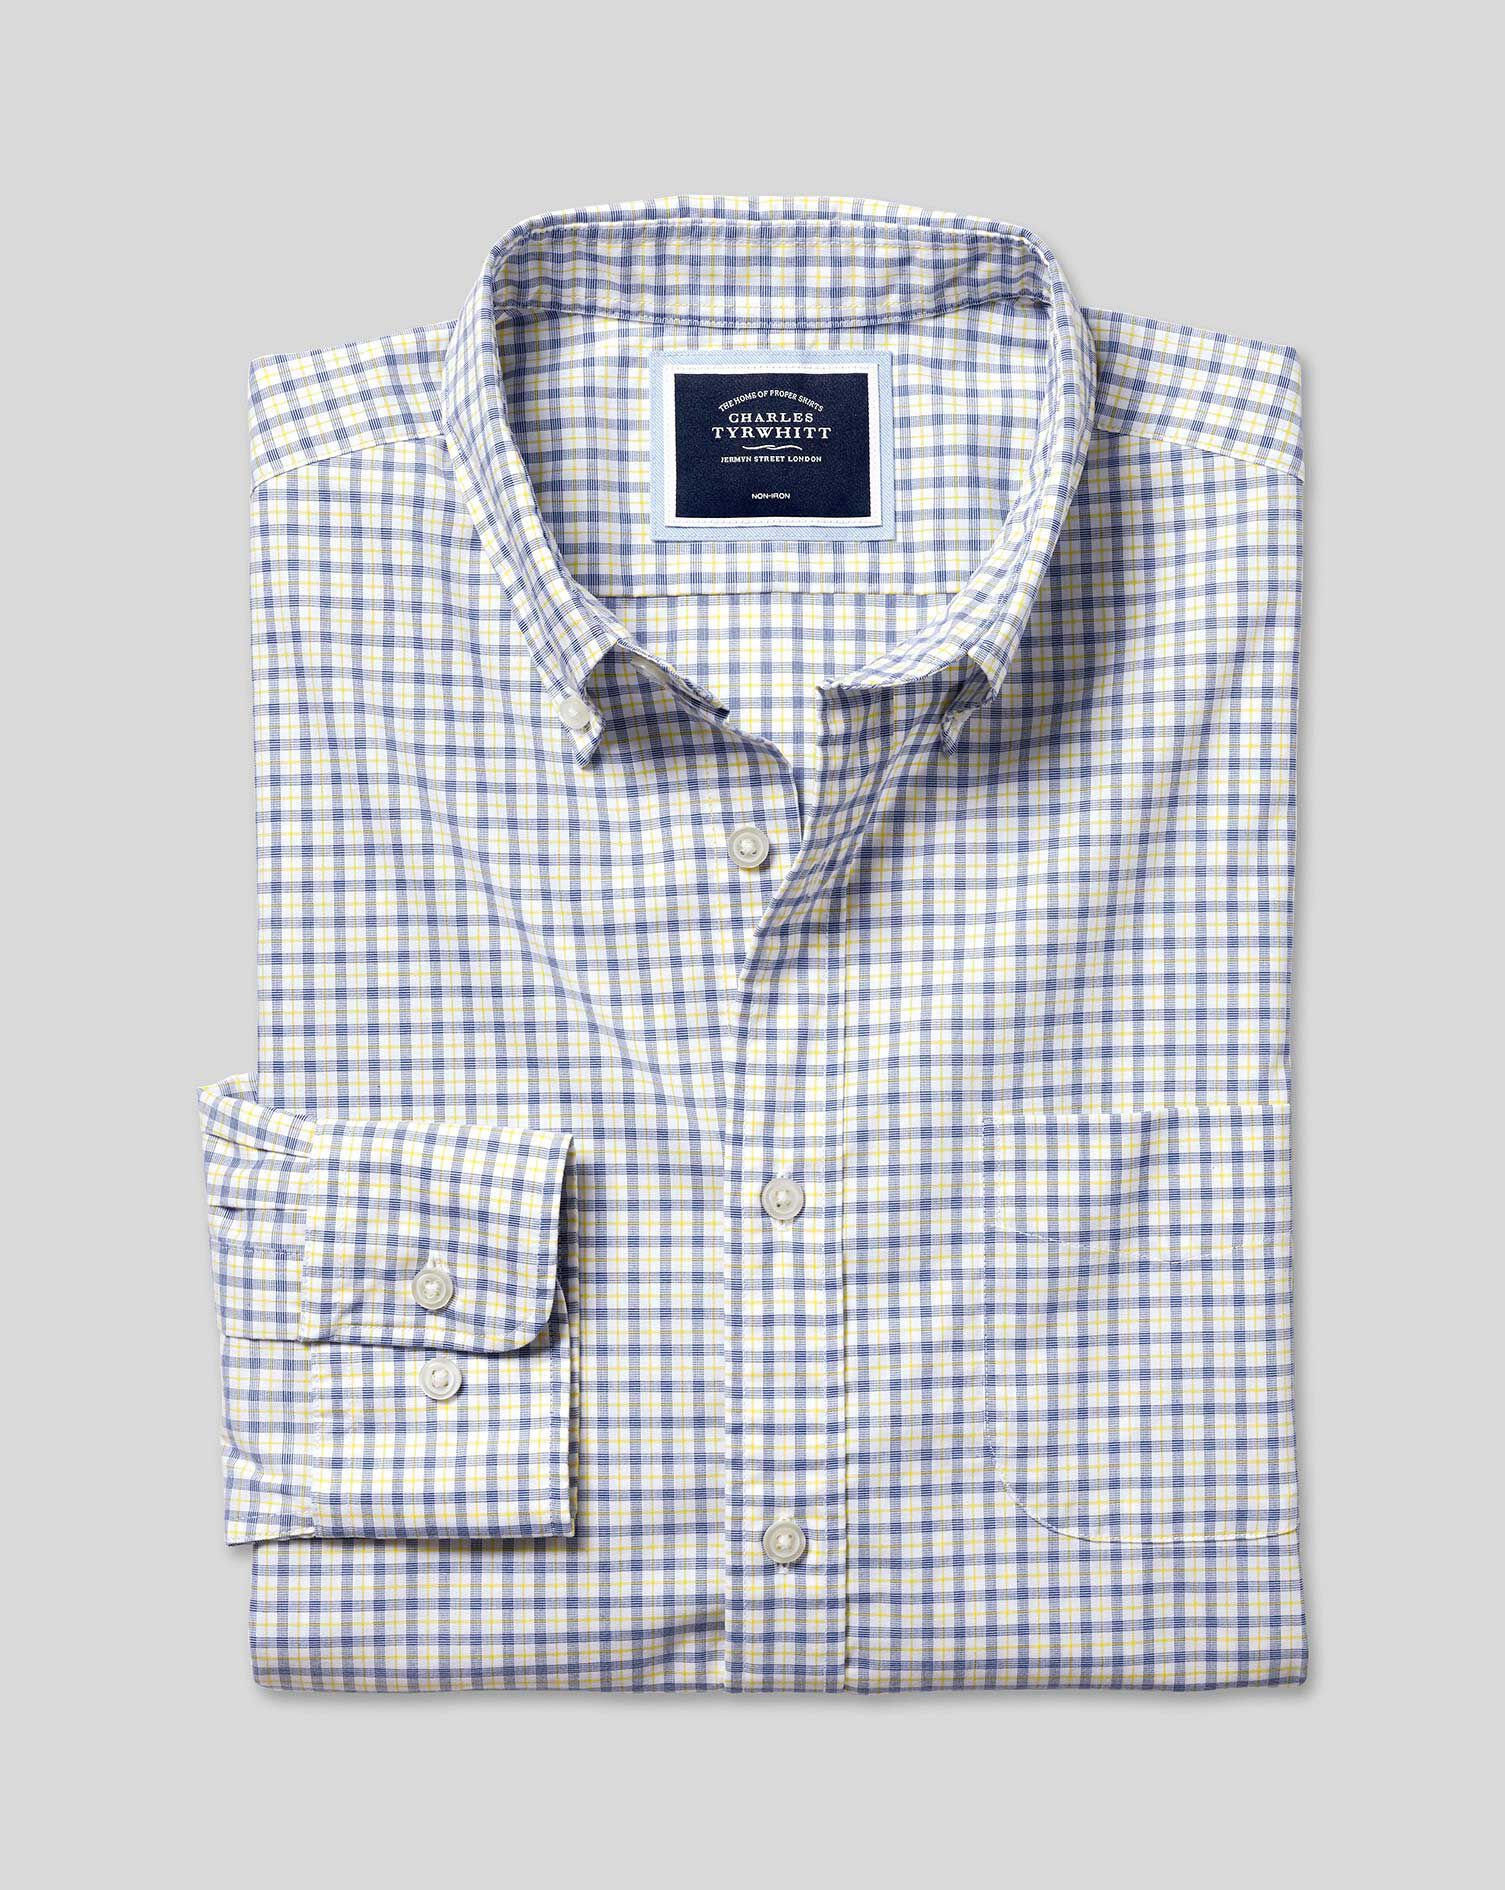 Charles Tyrwhitt Charles Tyrwhitt Blue Checkered Shirt 14.5 3784cm Non Iron Extra Slim Fit Double 